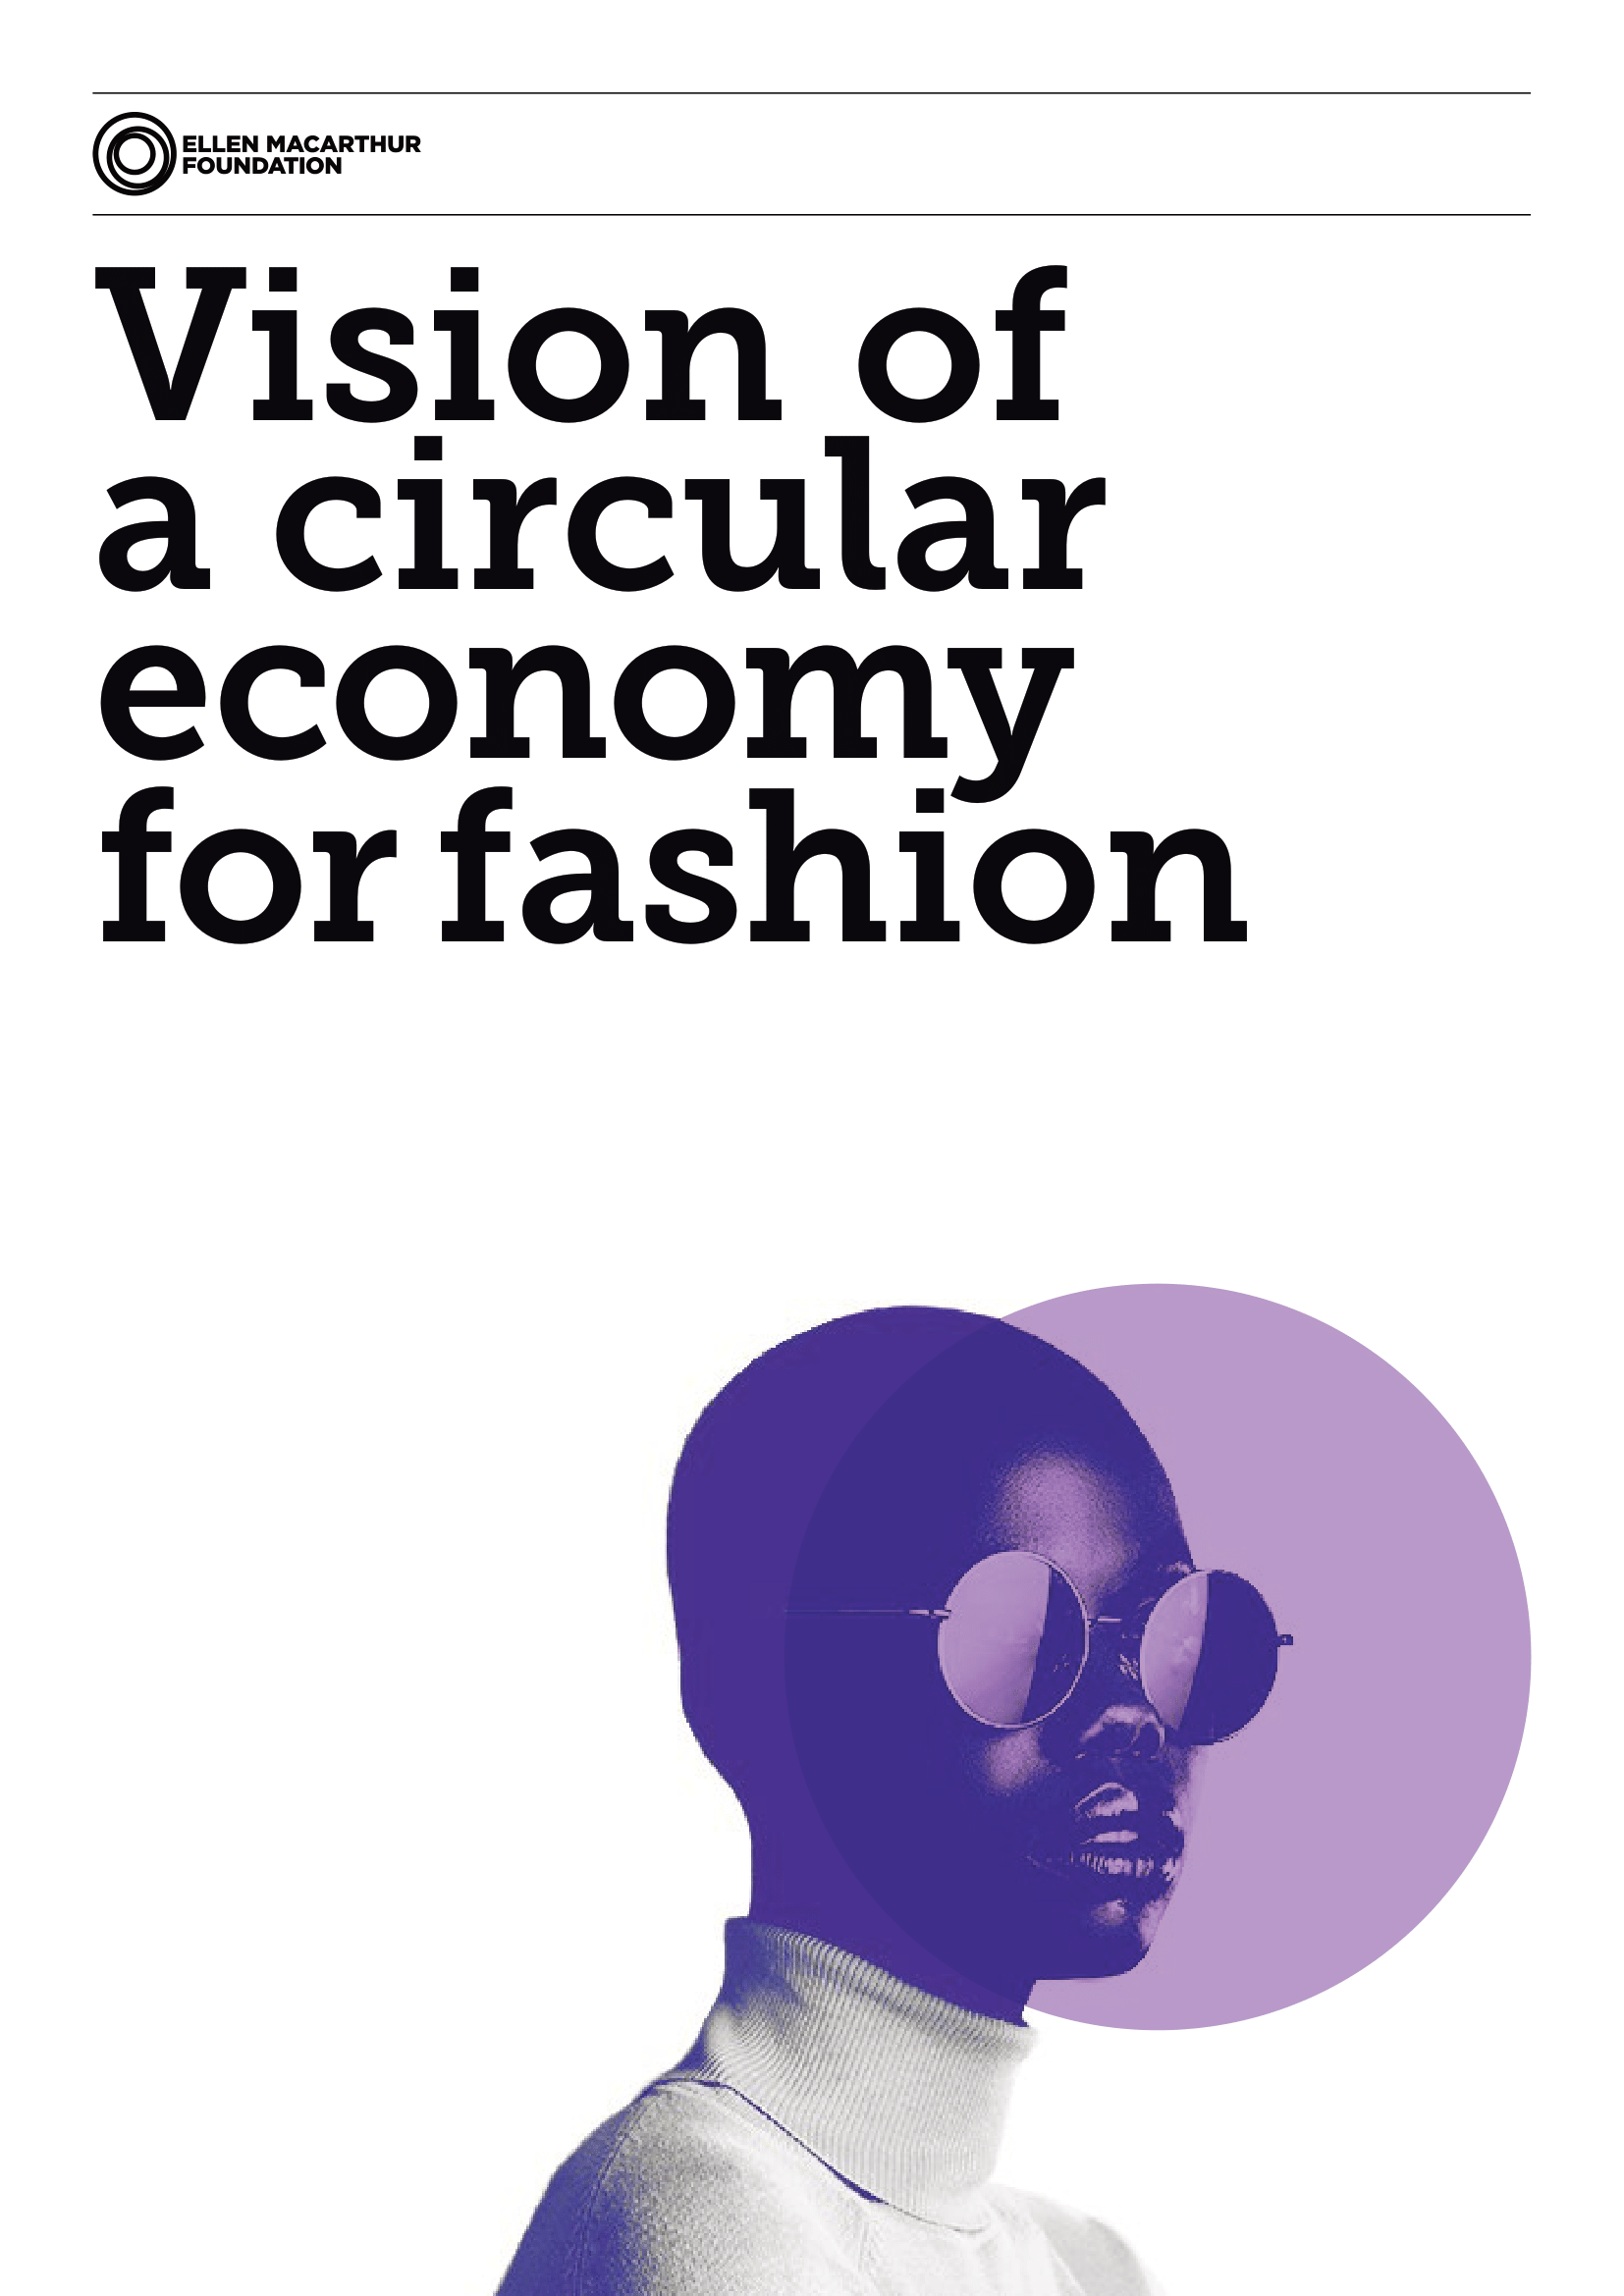 Make Fashion Circular - 2020